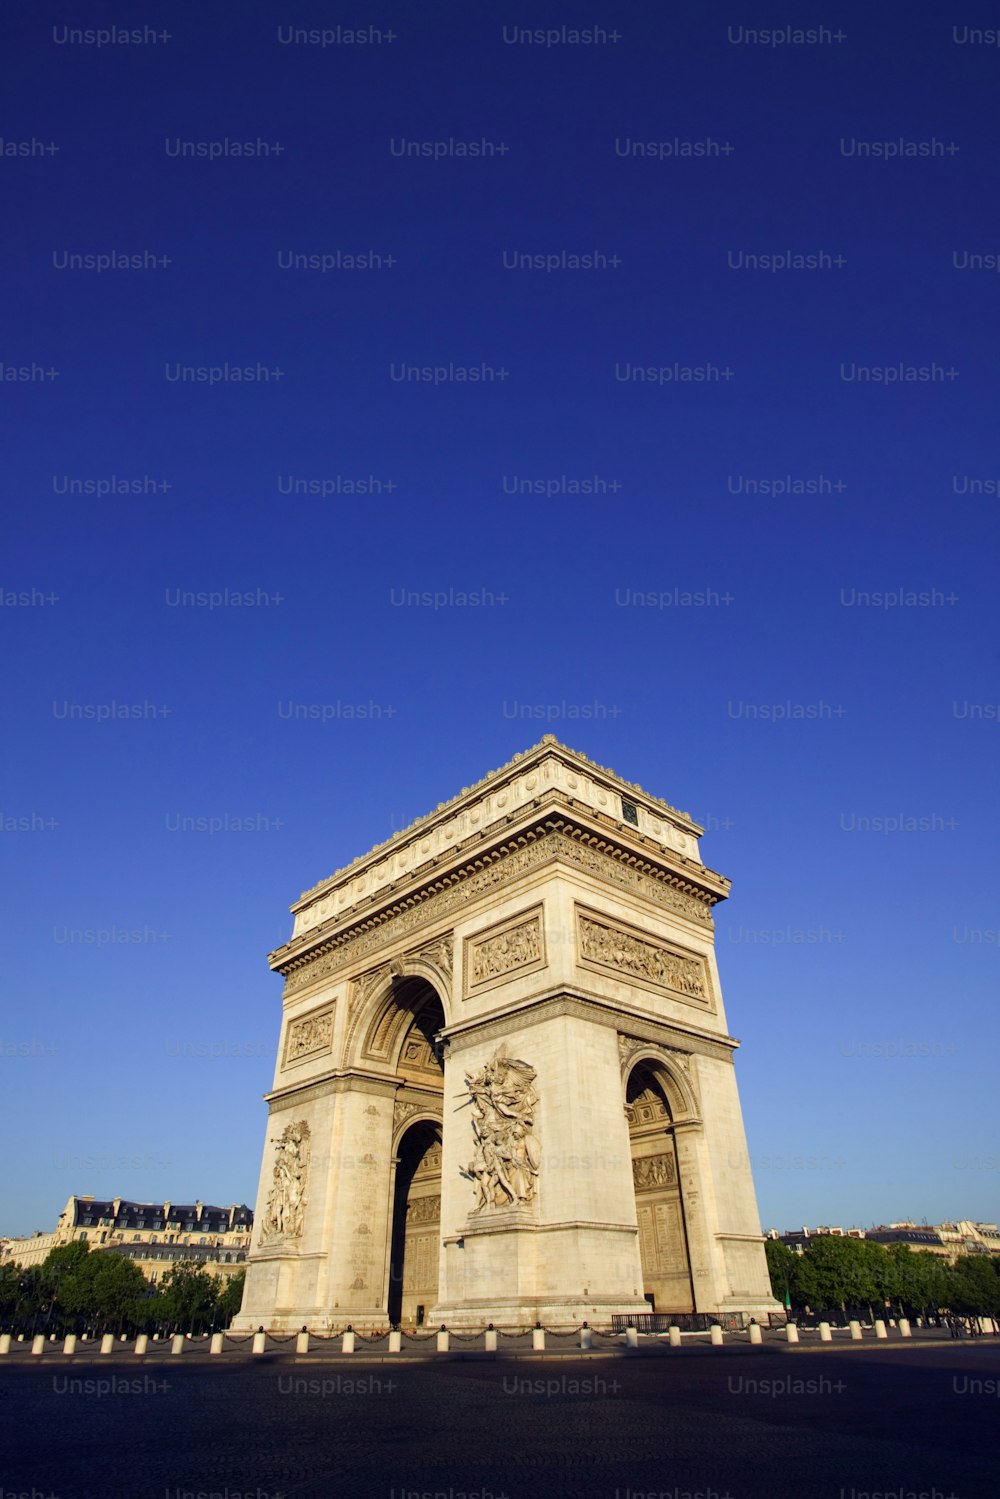 the arc of triumph in paris against a blue sky